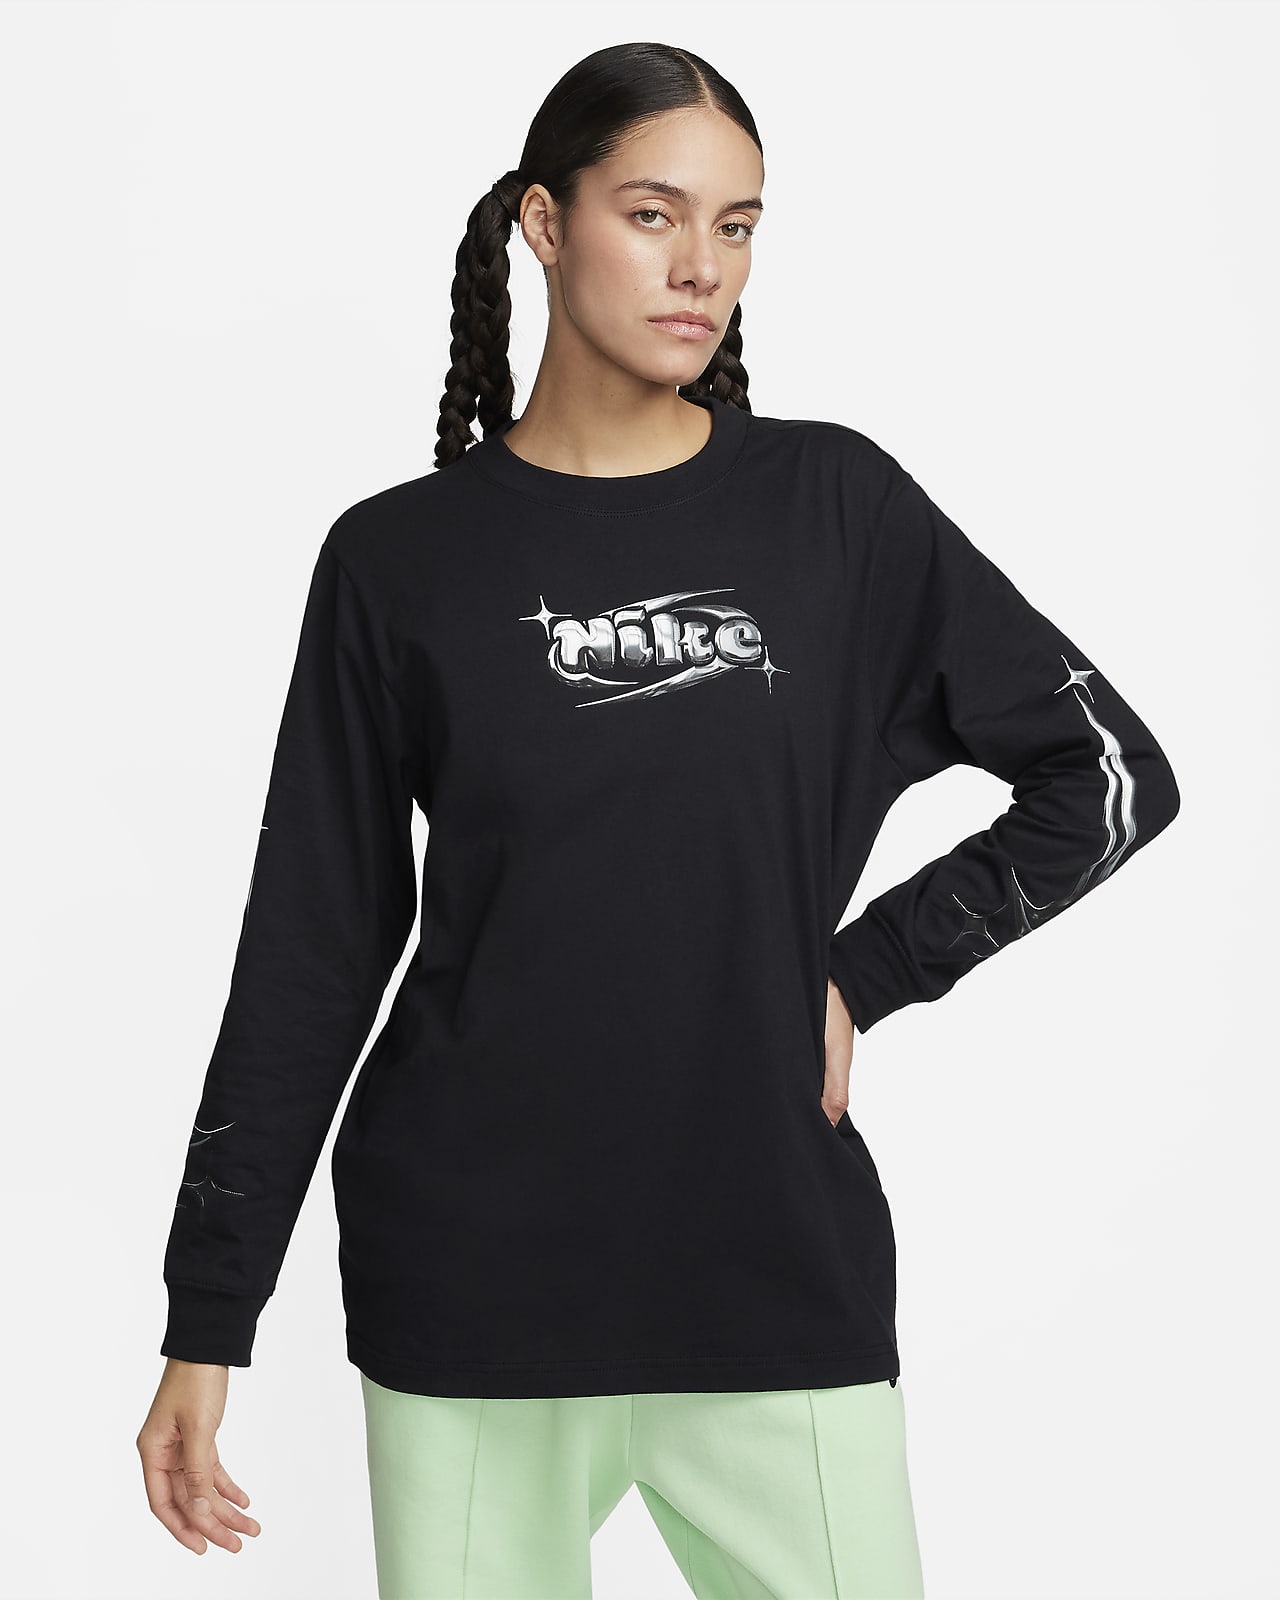 Nike Sportswear Women's Long-Sleeve T-Shirt. Nike LU